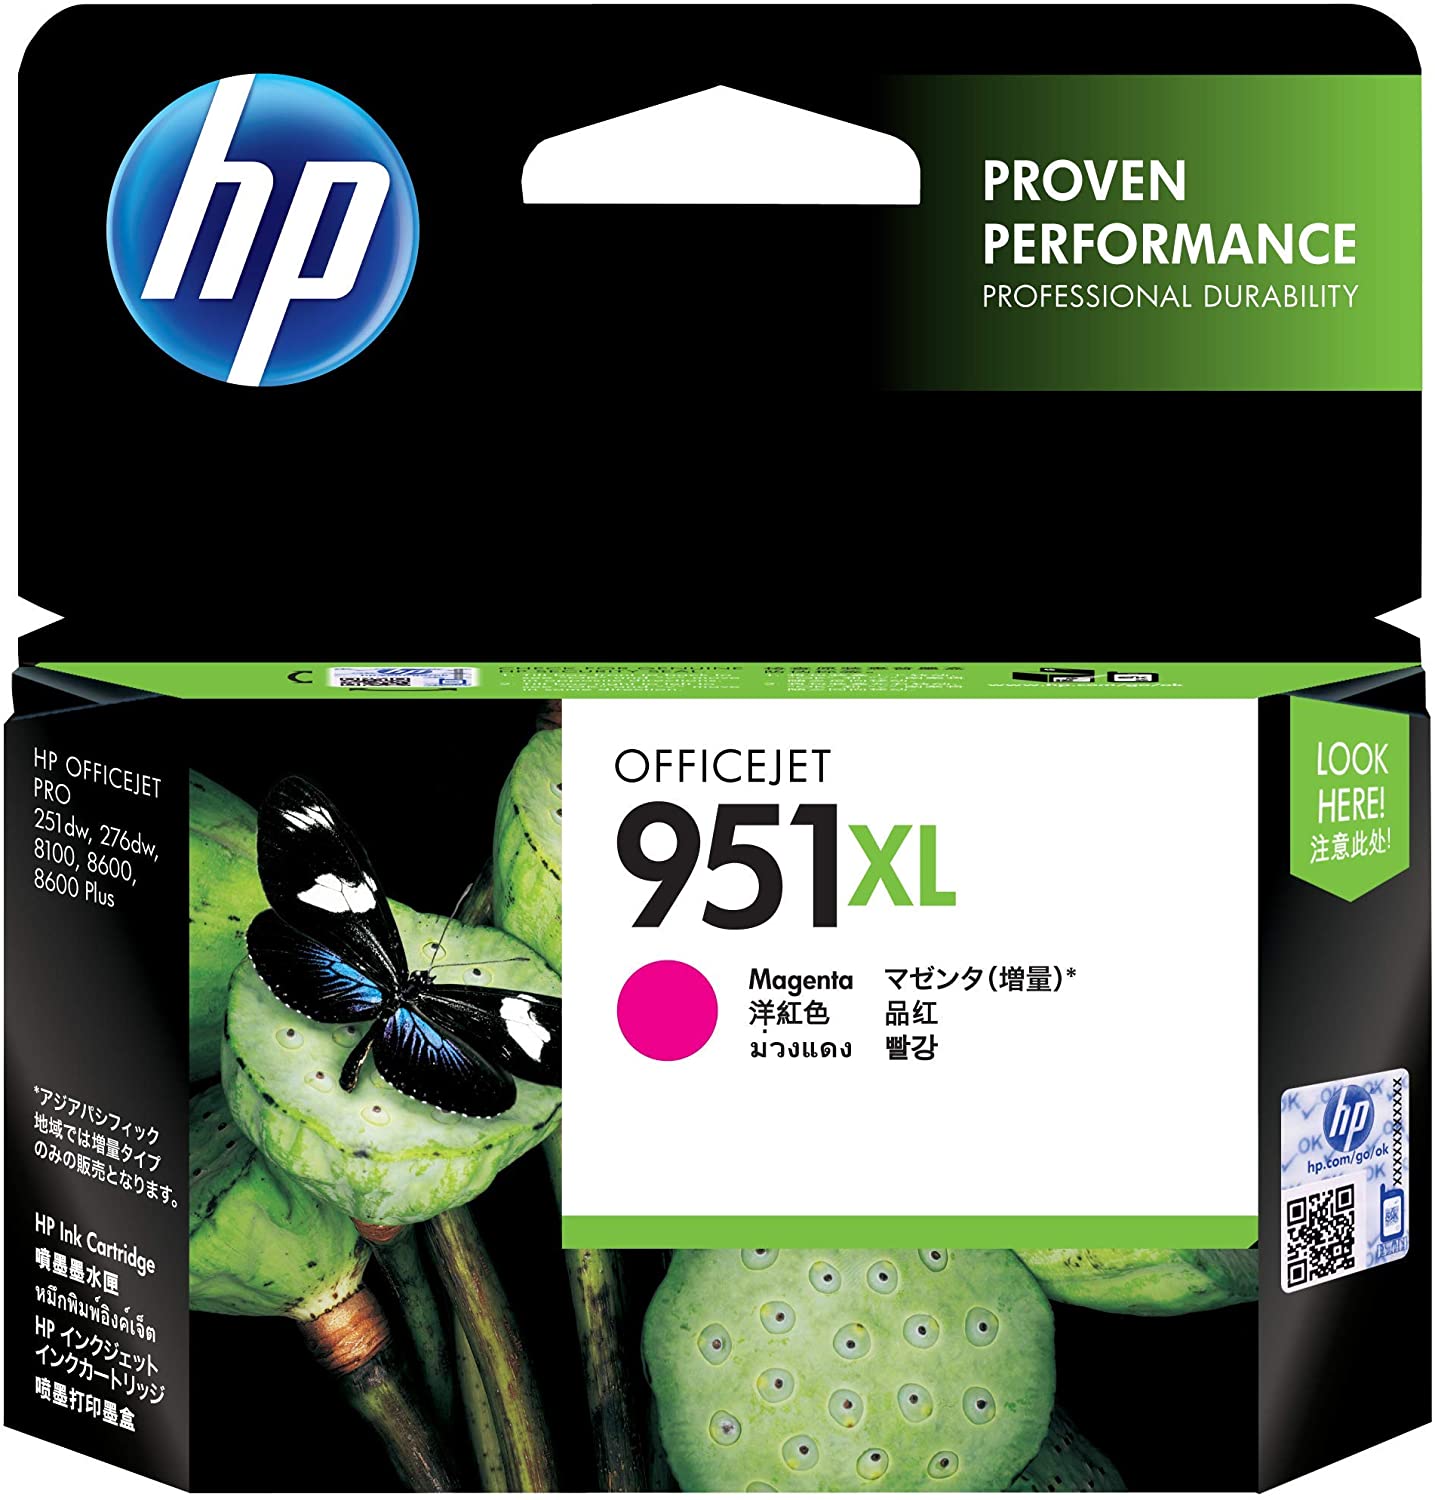 HP 951XL High Yield Magenta Original Ink Cartridge [CN047AE] | Works with HP OfficeJet Pro 251, 276, 8100, 8600, 8610, 8620, 8640 Printers